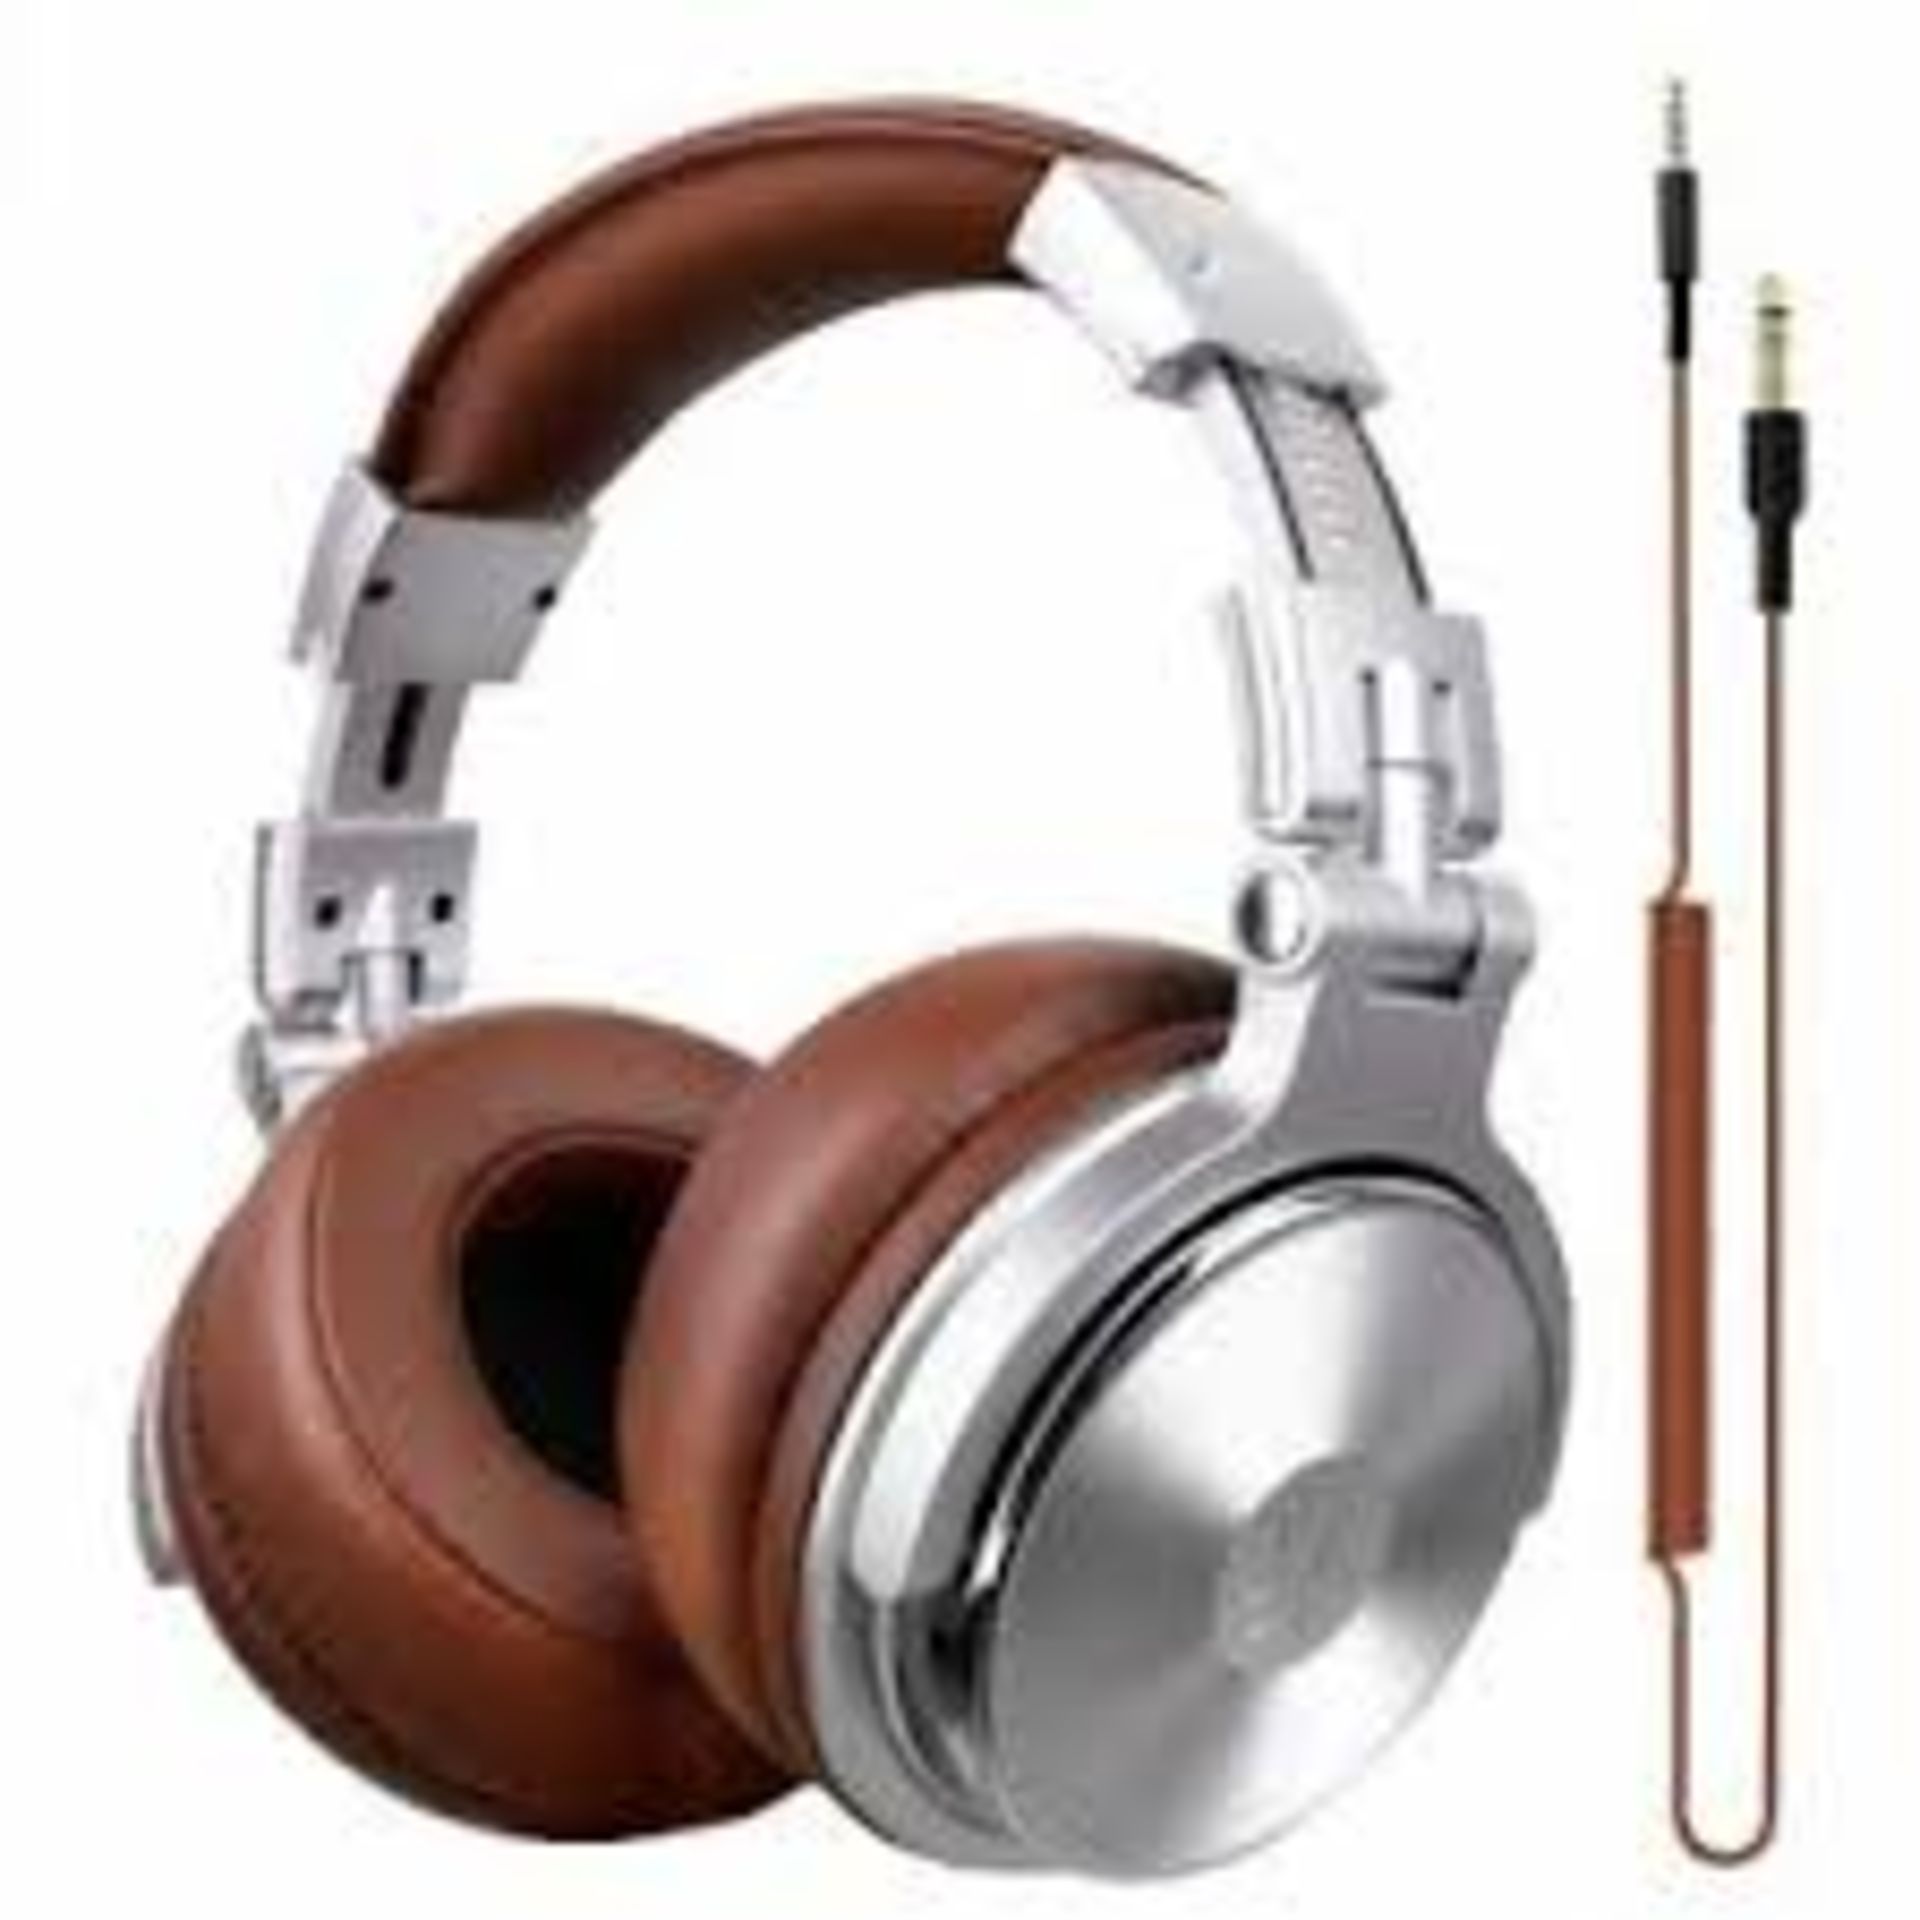 Boxed Brand New One Audio Studio Bluetooth Over Ear Headphones RRP £40